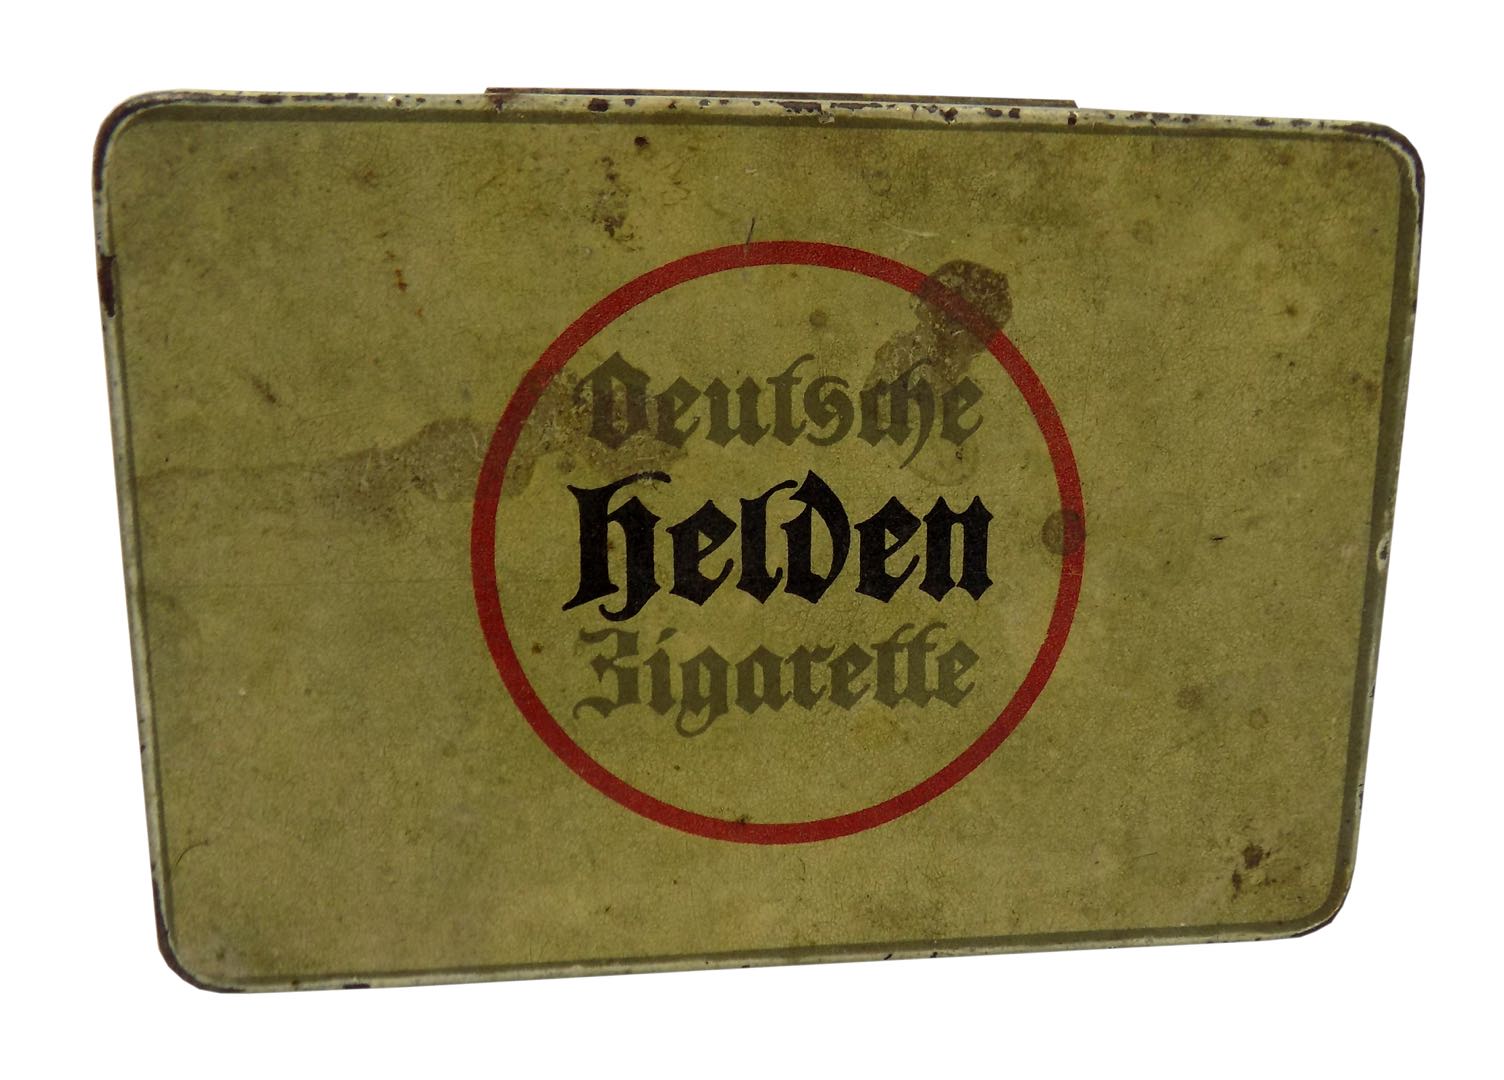 Blaszane Pudełko po cygarach Deutsche Helden Zigarette Dresden zdjęcie 1